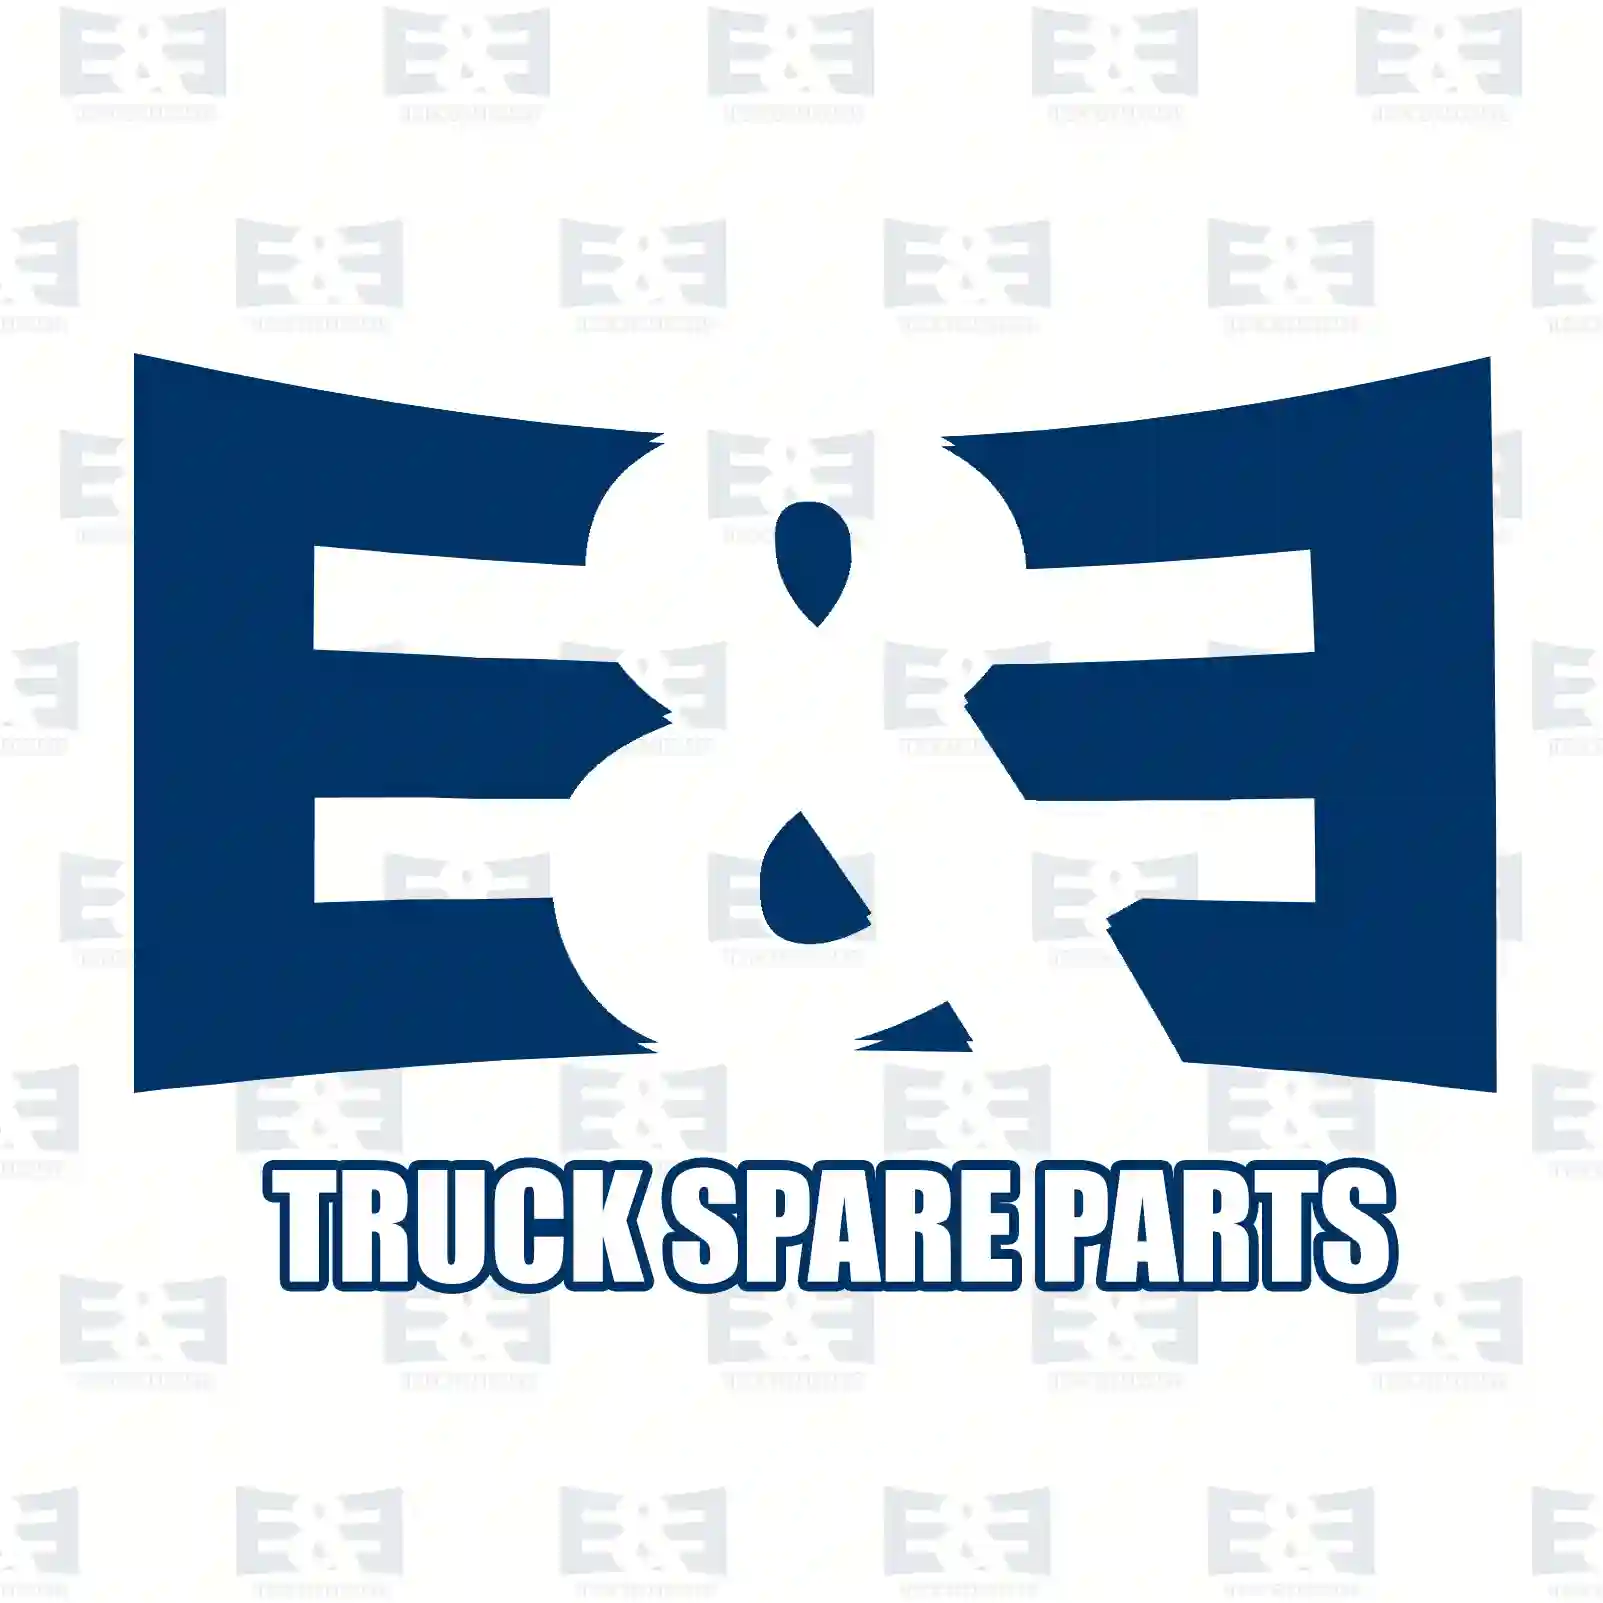 Load Sensitive Valve Brake power regulator, EE No 2E2297140 ,  oem no:1518973, 0034312212, 1935094 E&E Truck Spare Parts | Truck Spare Parts, Auotomotive Spare Parts